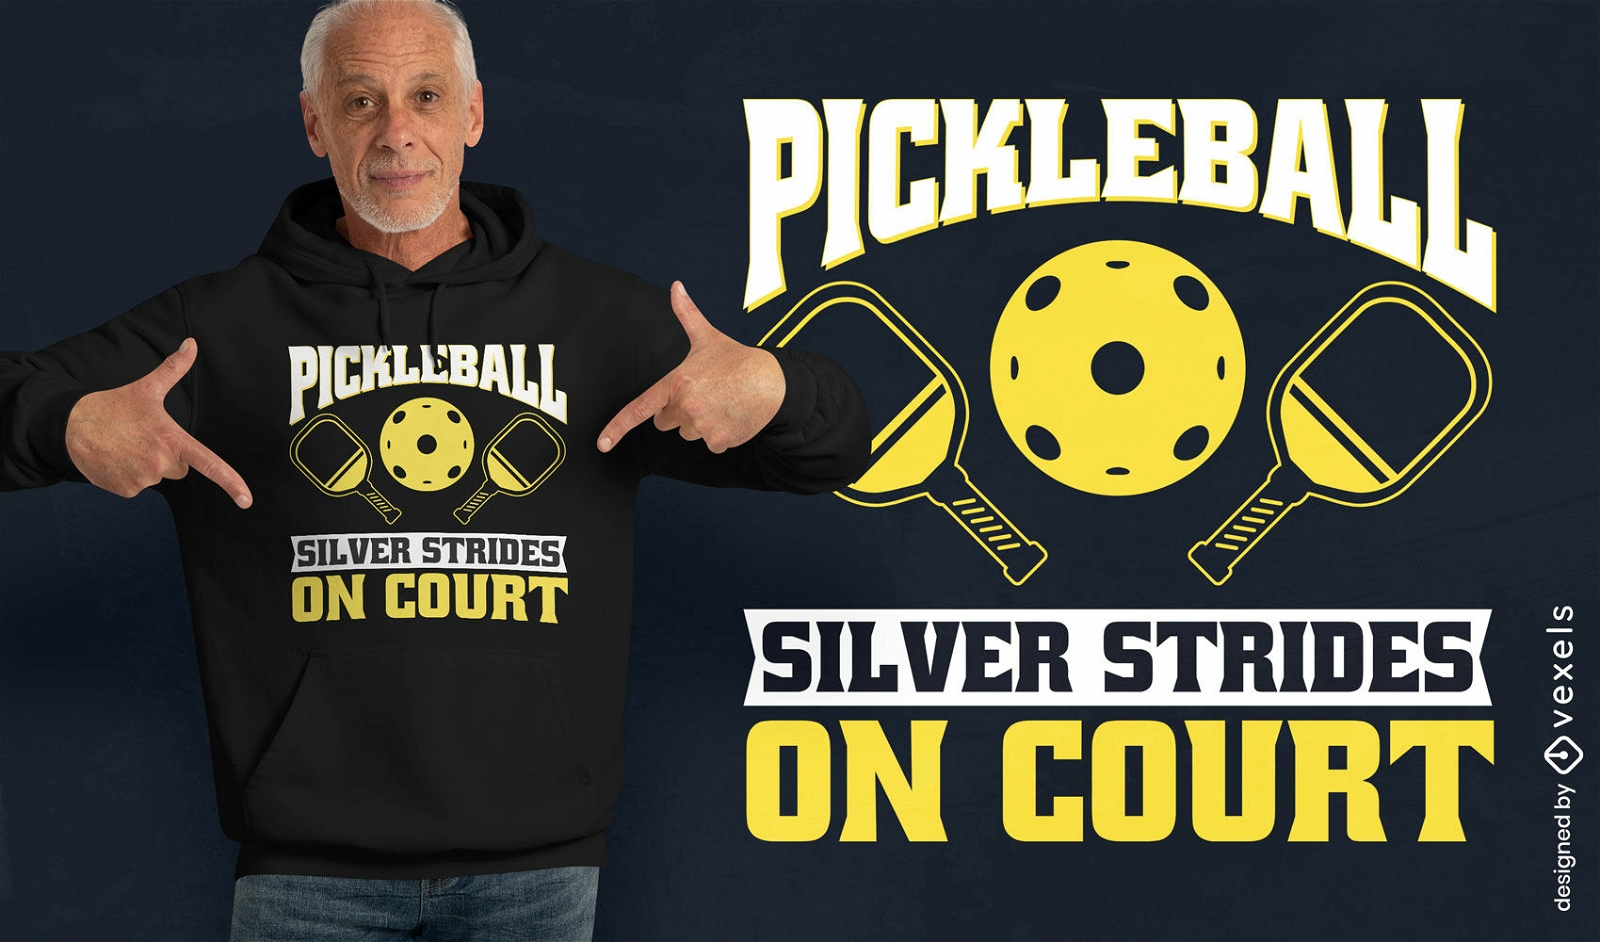 Pickleball silver strokes on court t-shirt design